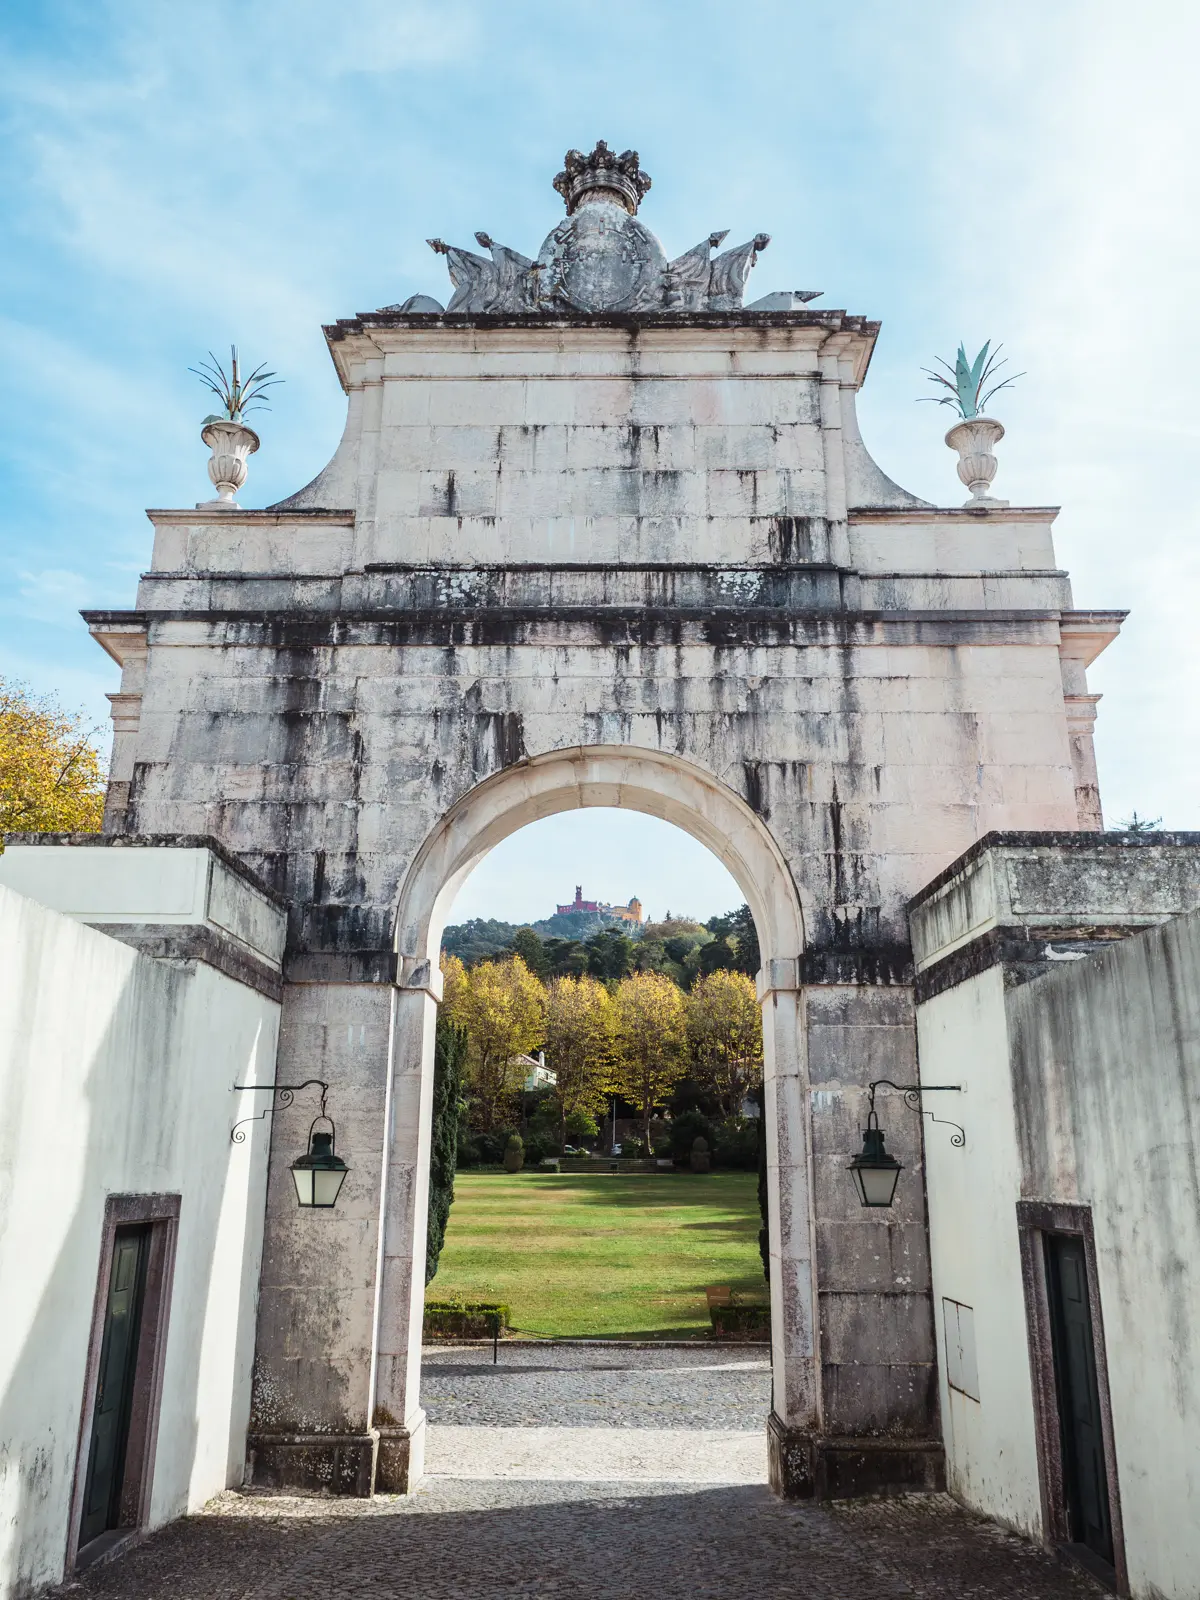 White ornate stone arch at Valverde Sintra Palácio de Seteais Hotel, close to Quinta da Regaleira in Sintra, Portugal.